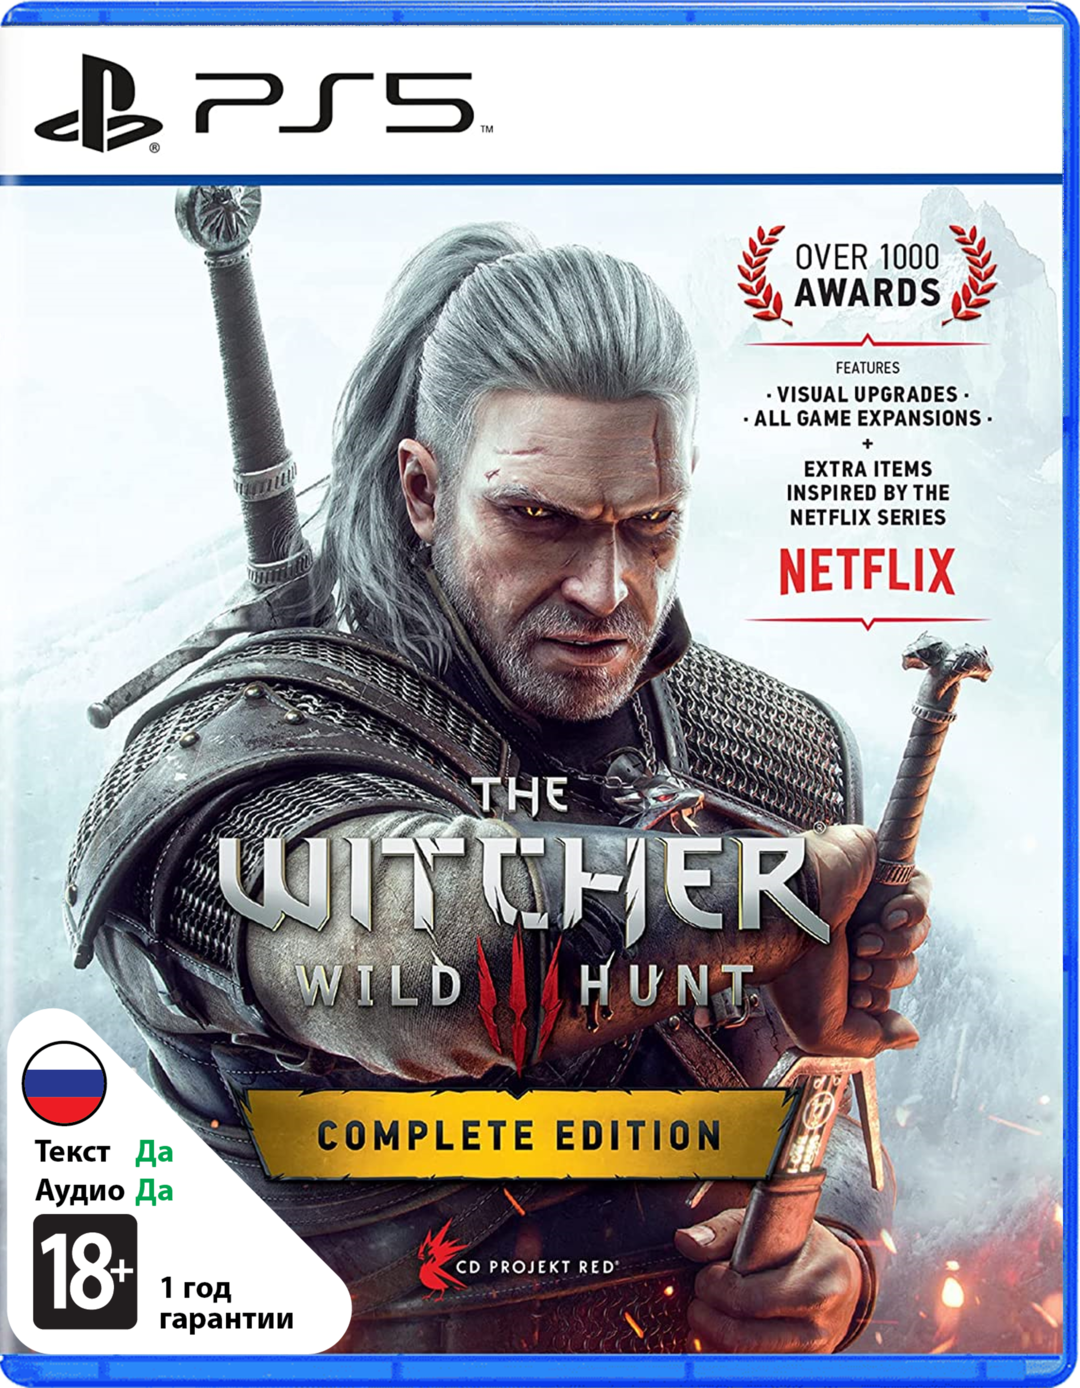 Ведьмак 3: Дикая Охота (Witcher 3: Wild Hunt) - Complete Edition [PS5]